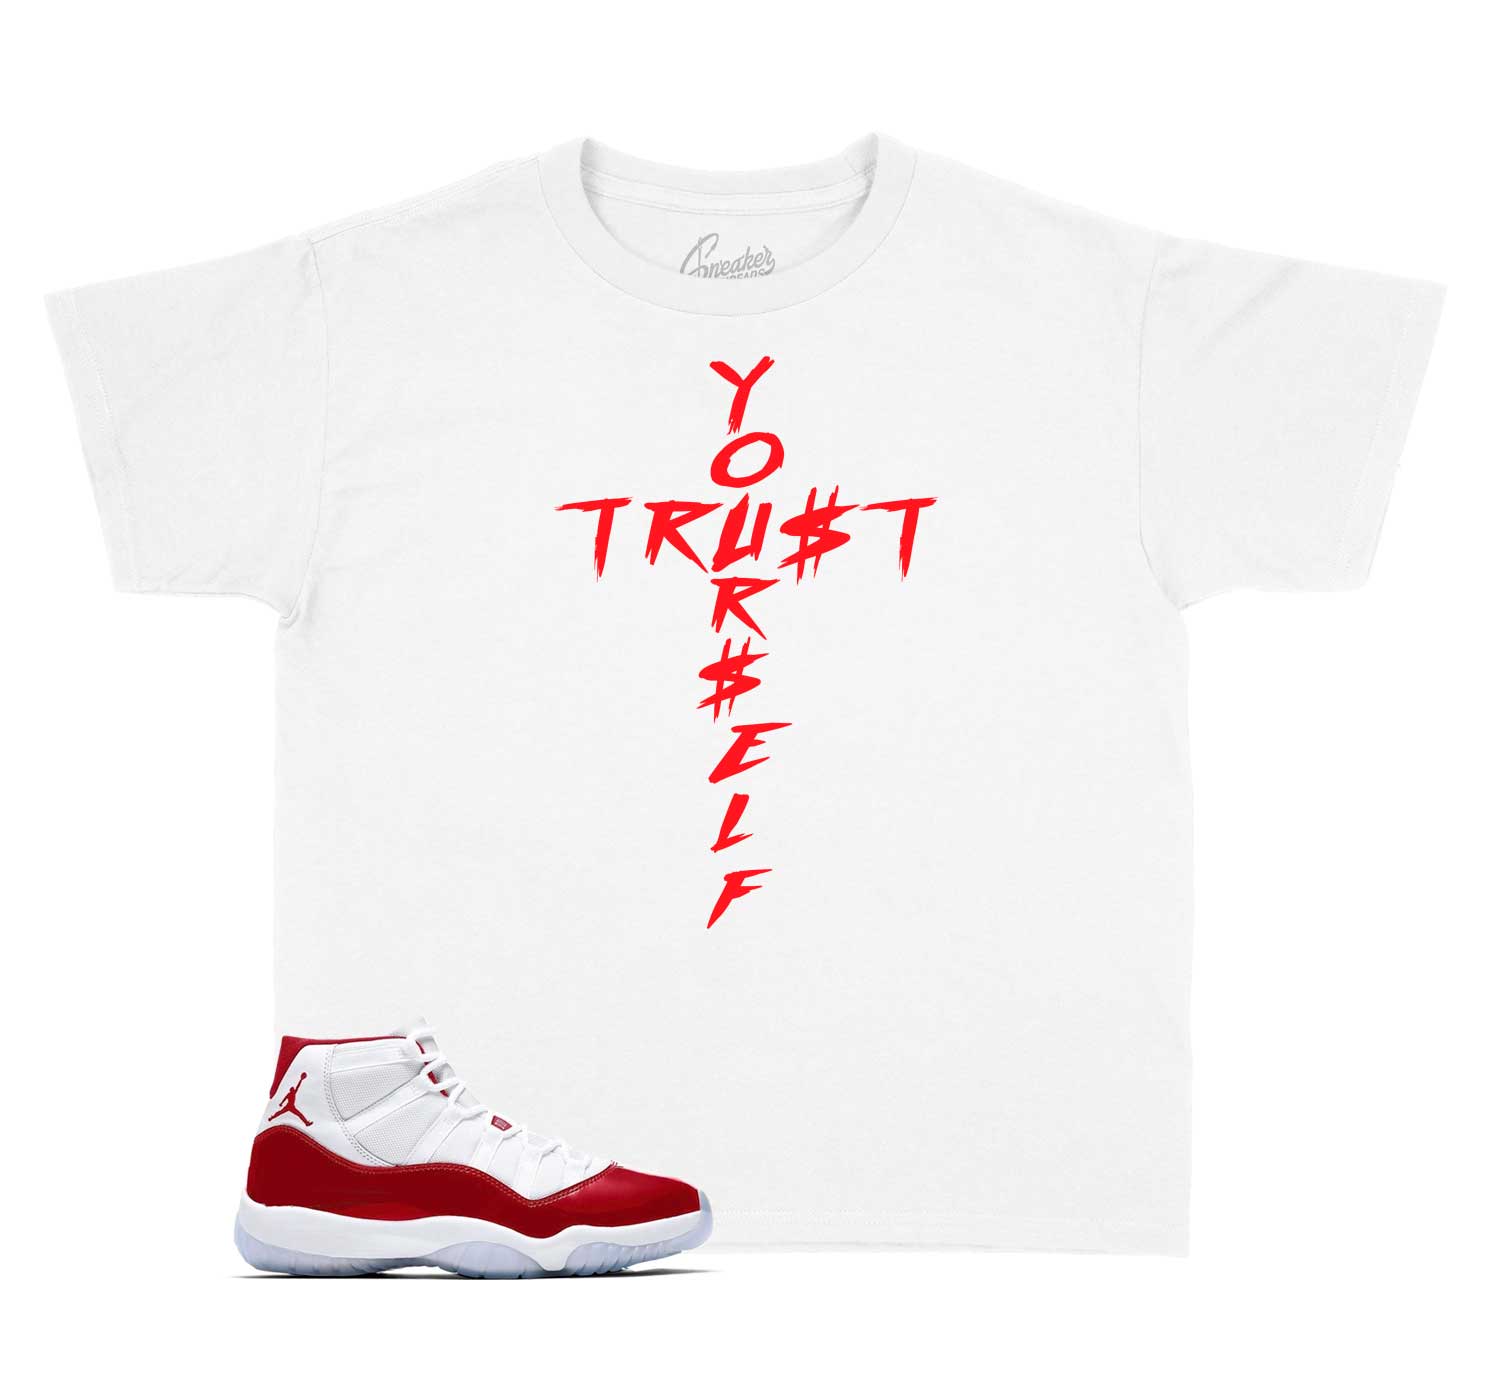 Kids Varsity Red 11 Shirt - Trust Yourself - White